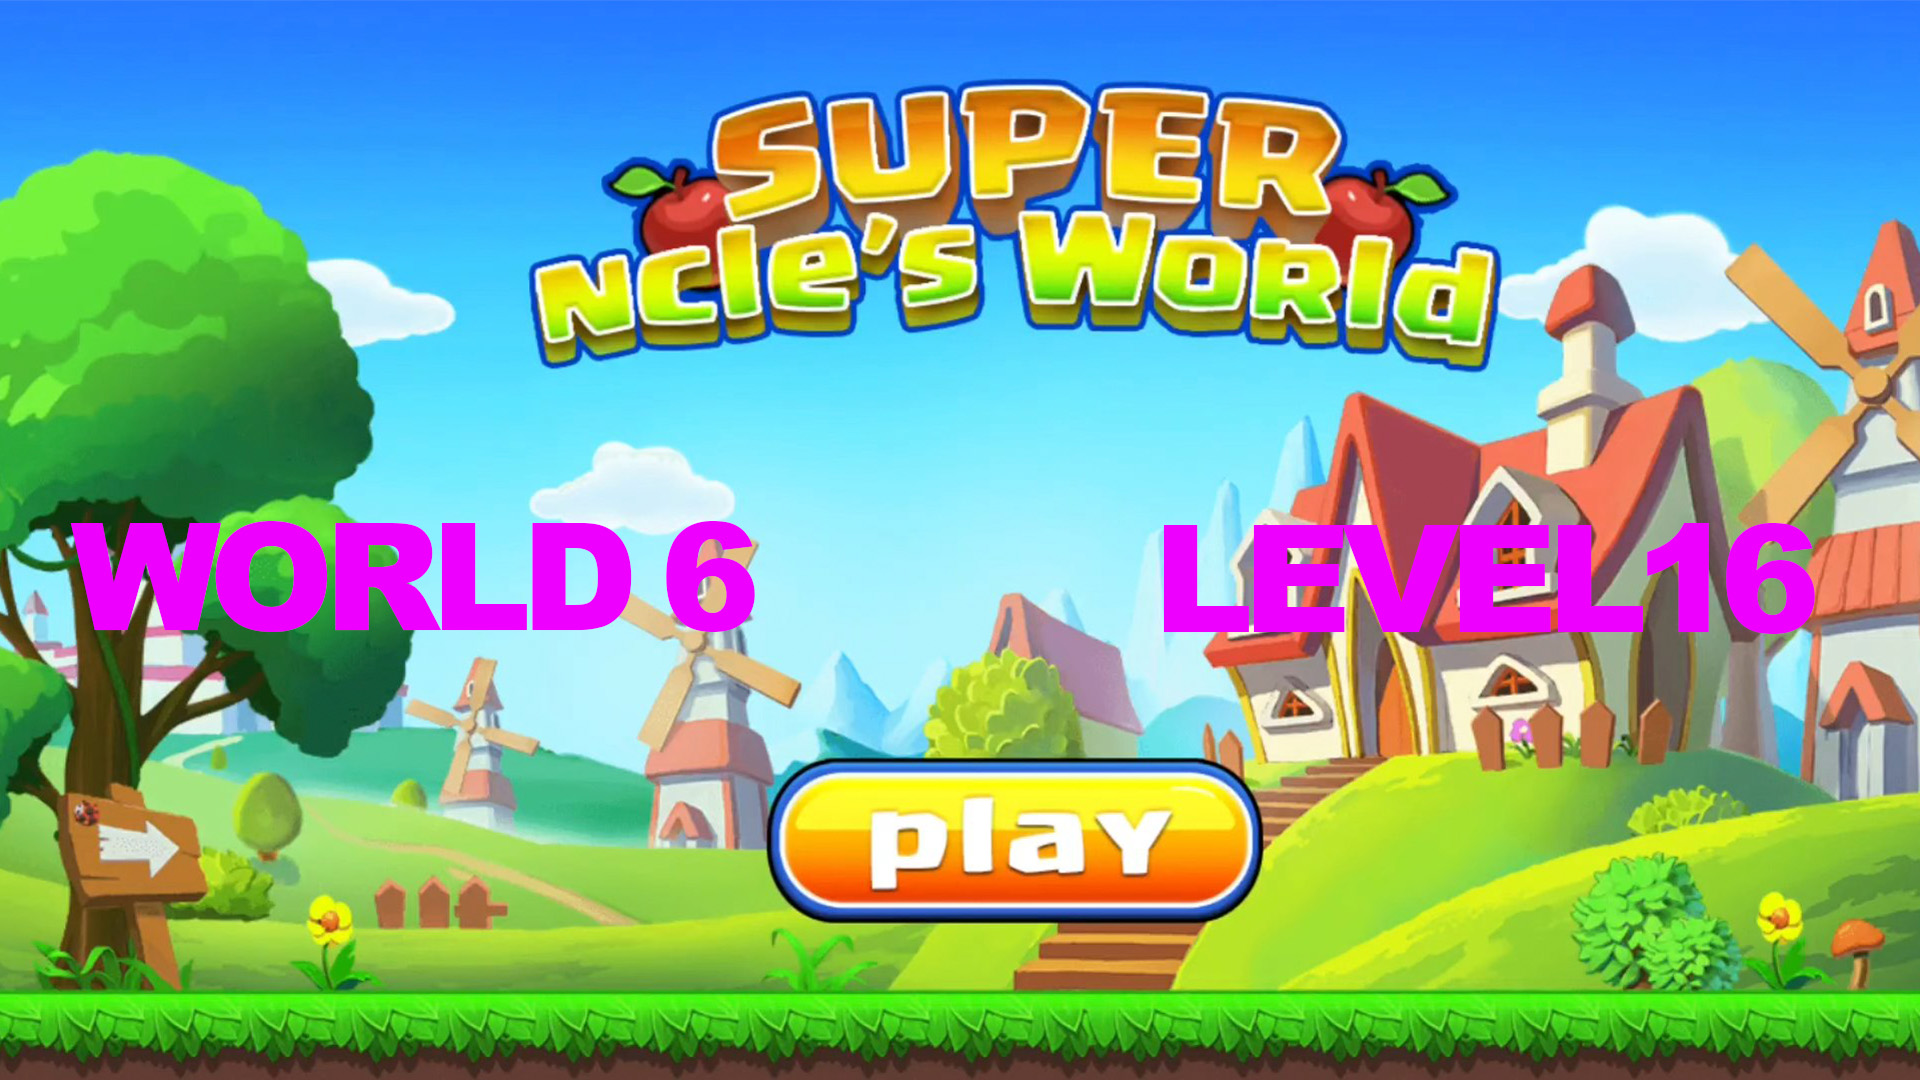 Super ncle's  World 6. Level 16.